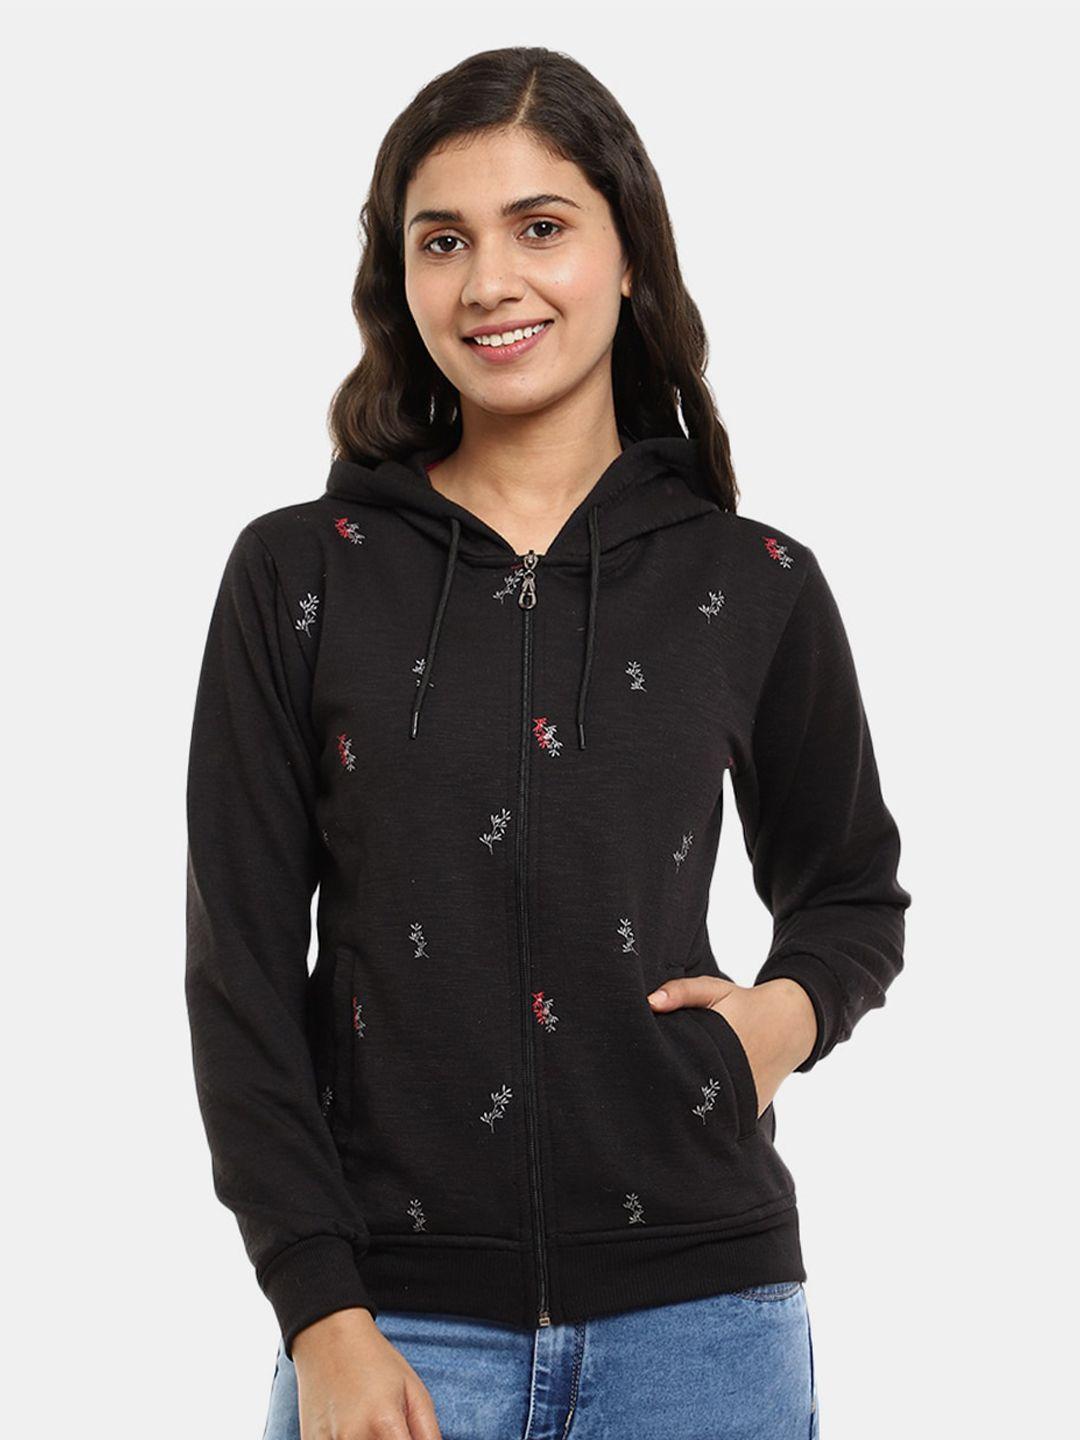 v-mart women black printed fleece sweatshirt